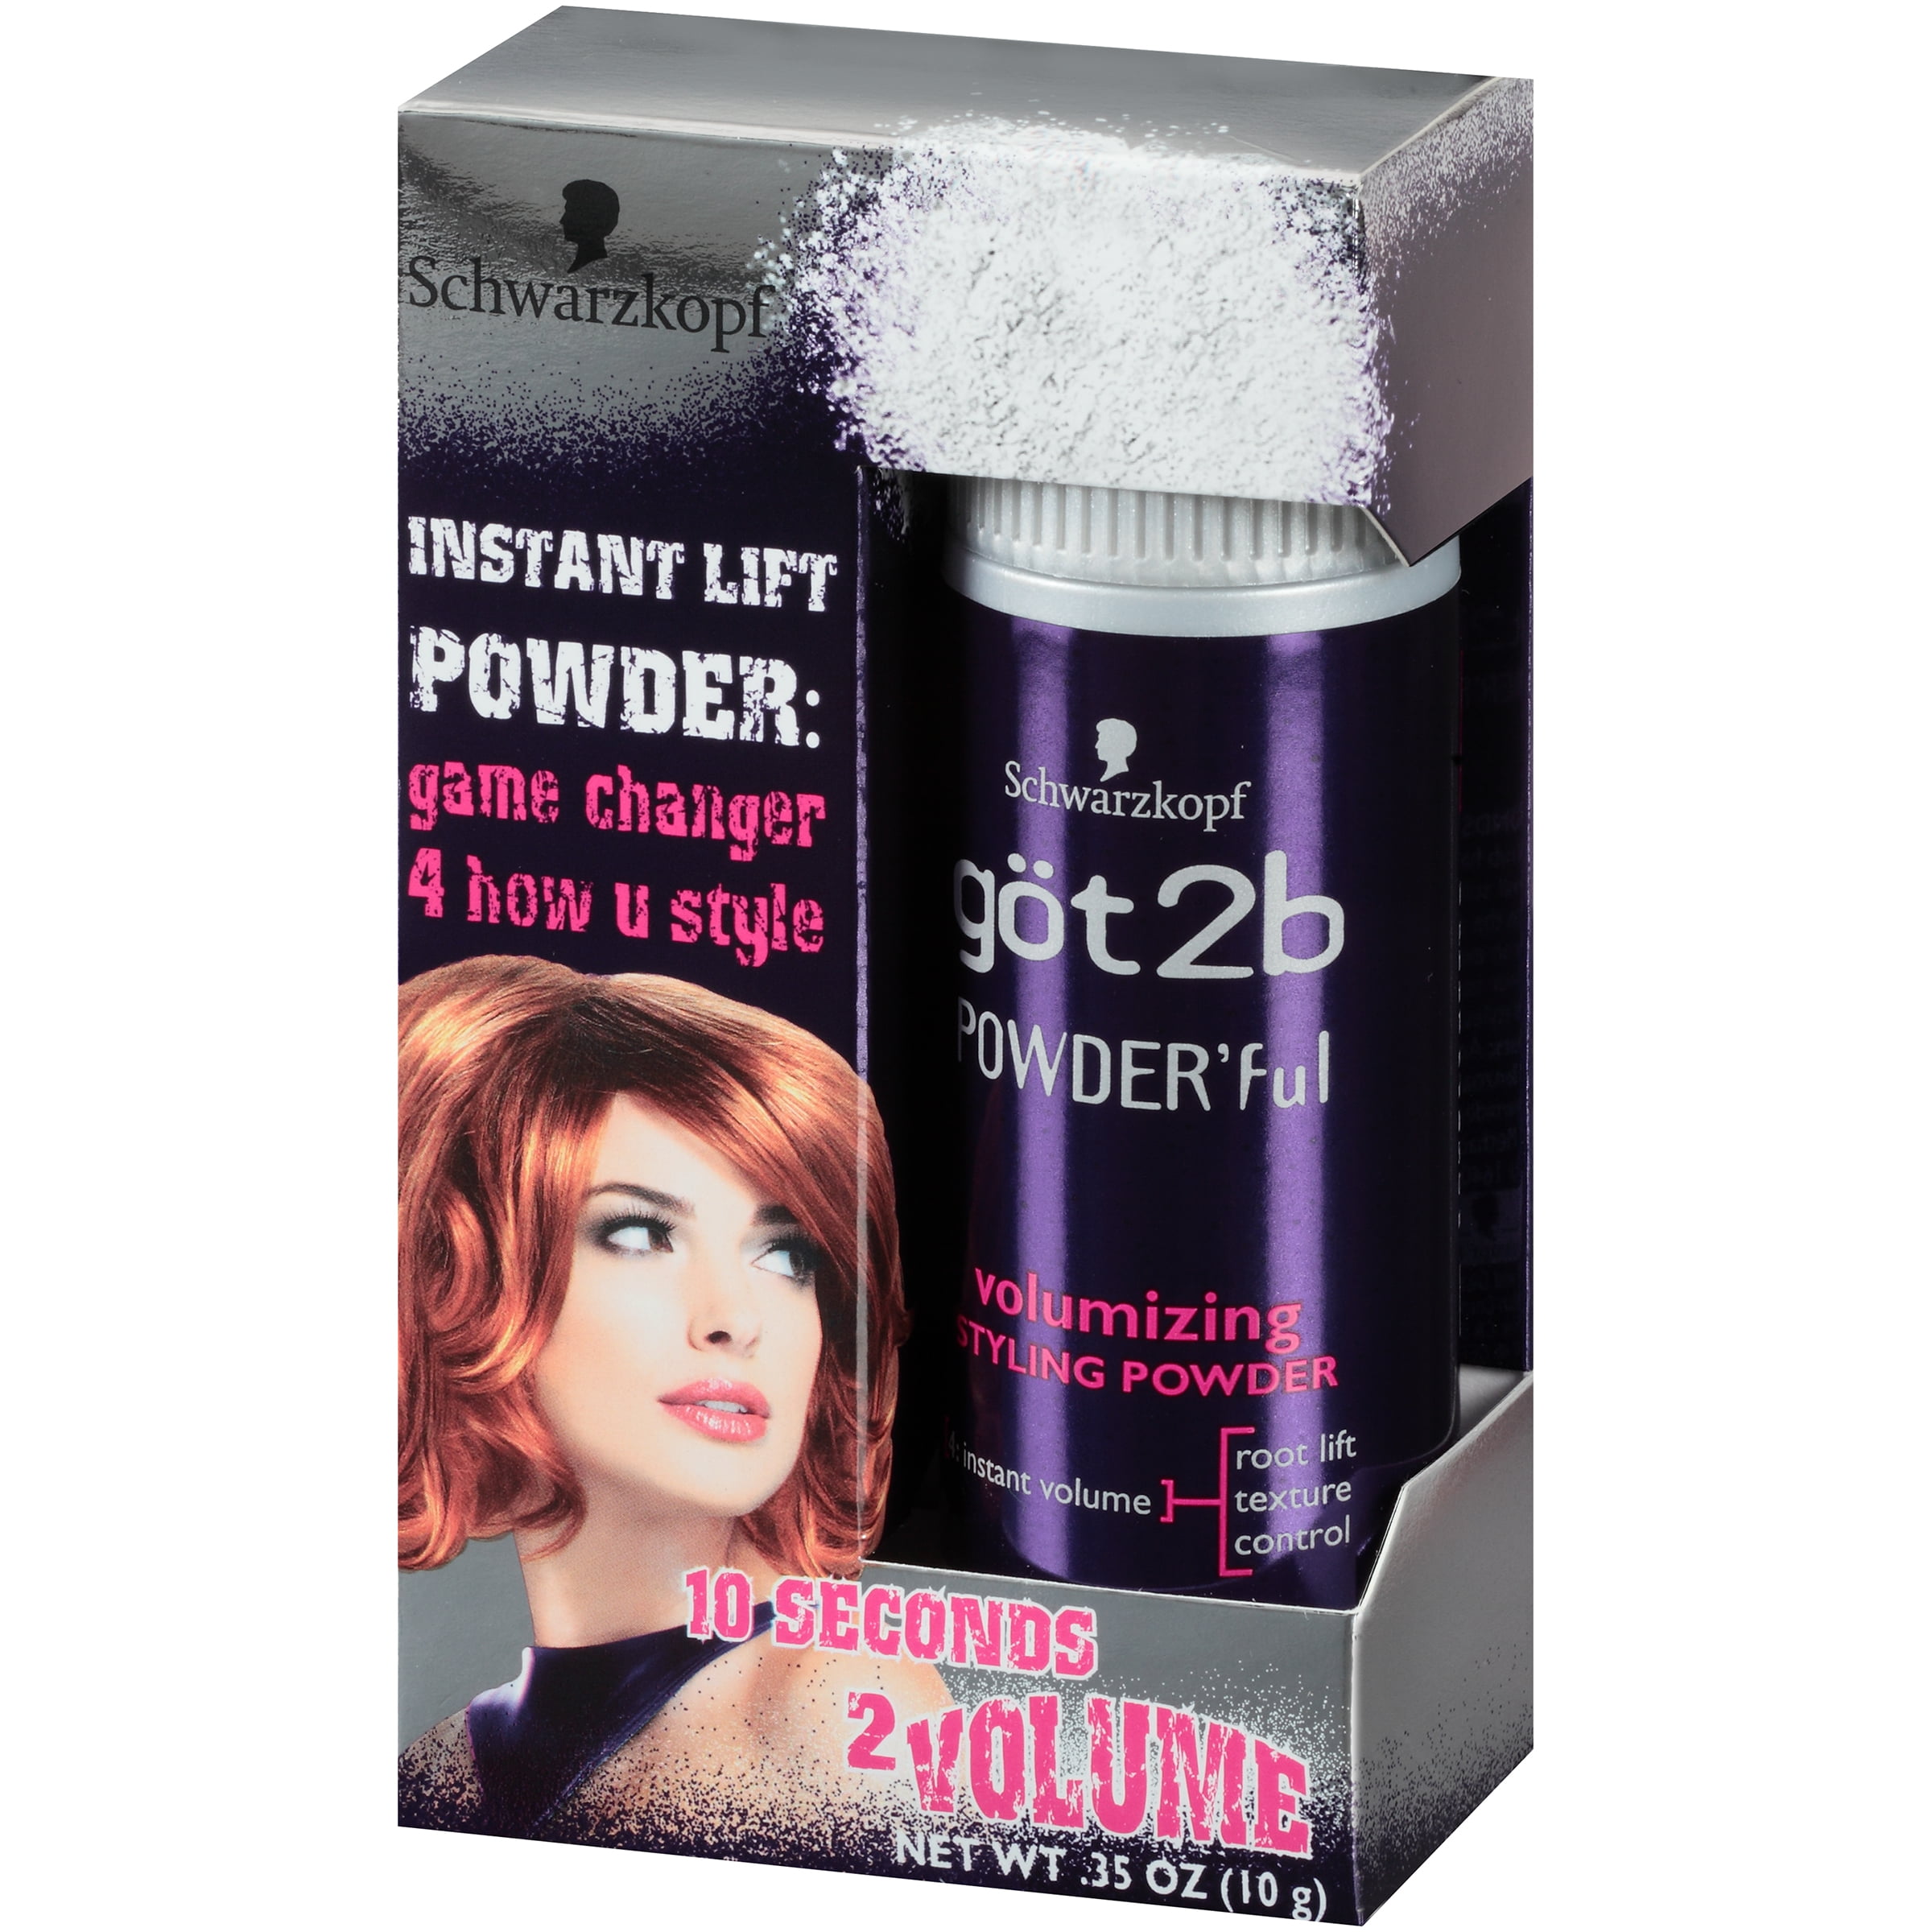 Got2b Powderful Volumizing Hair Styling Powder 035 Ounce